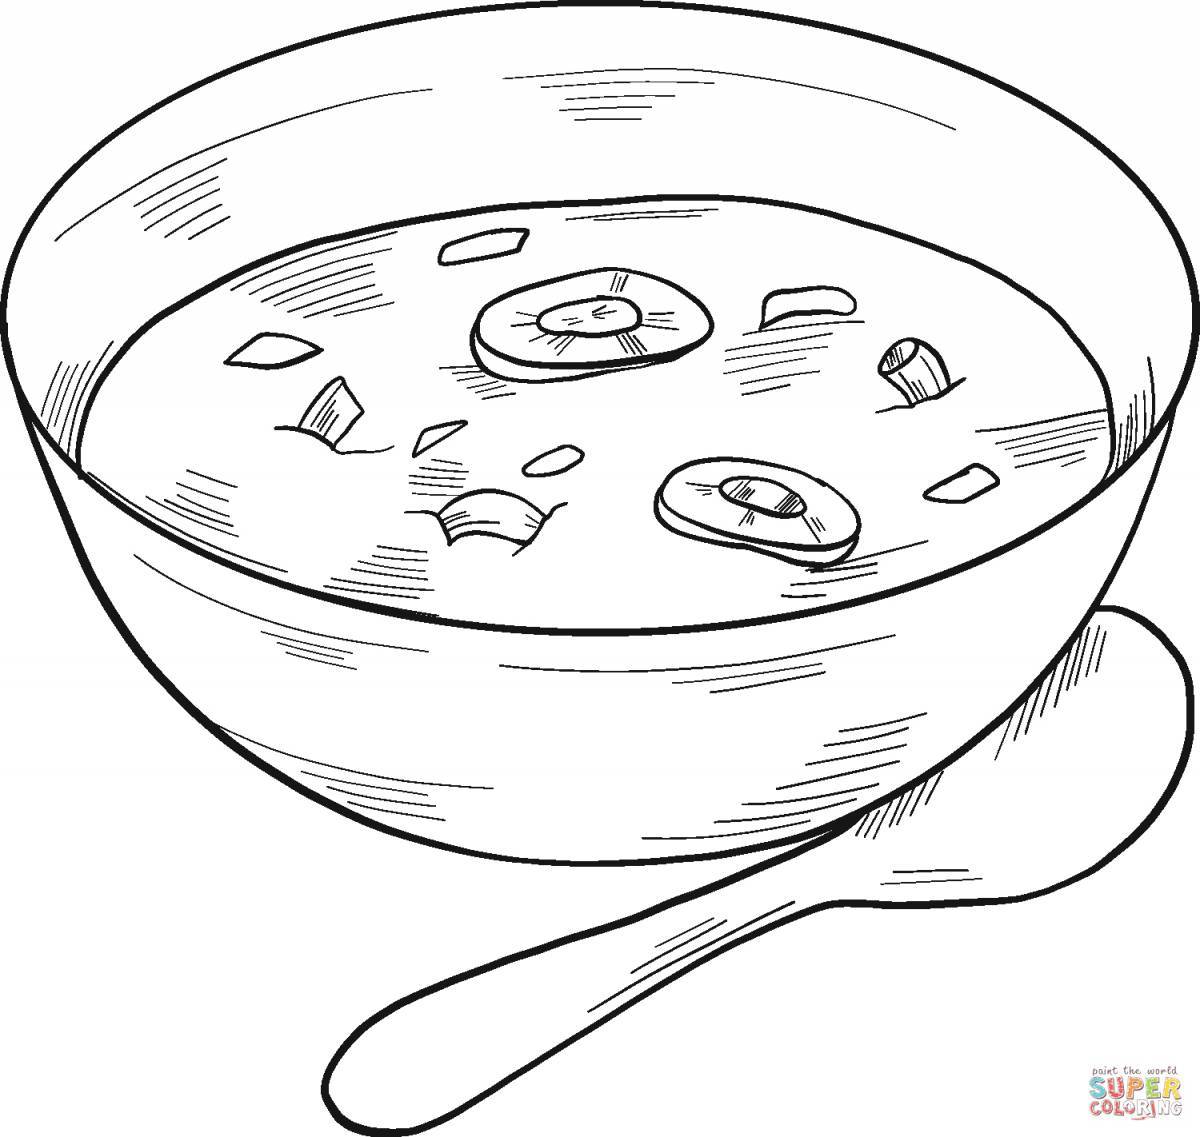 Coloring book spellbinding soup